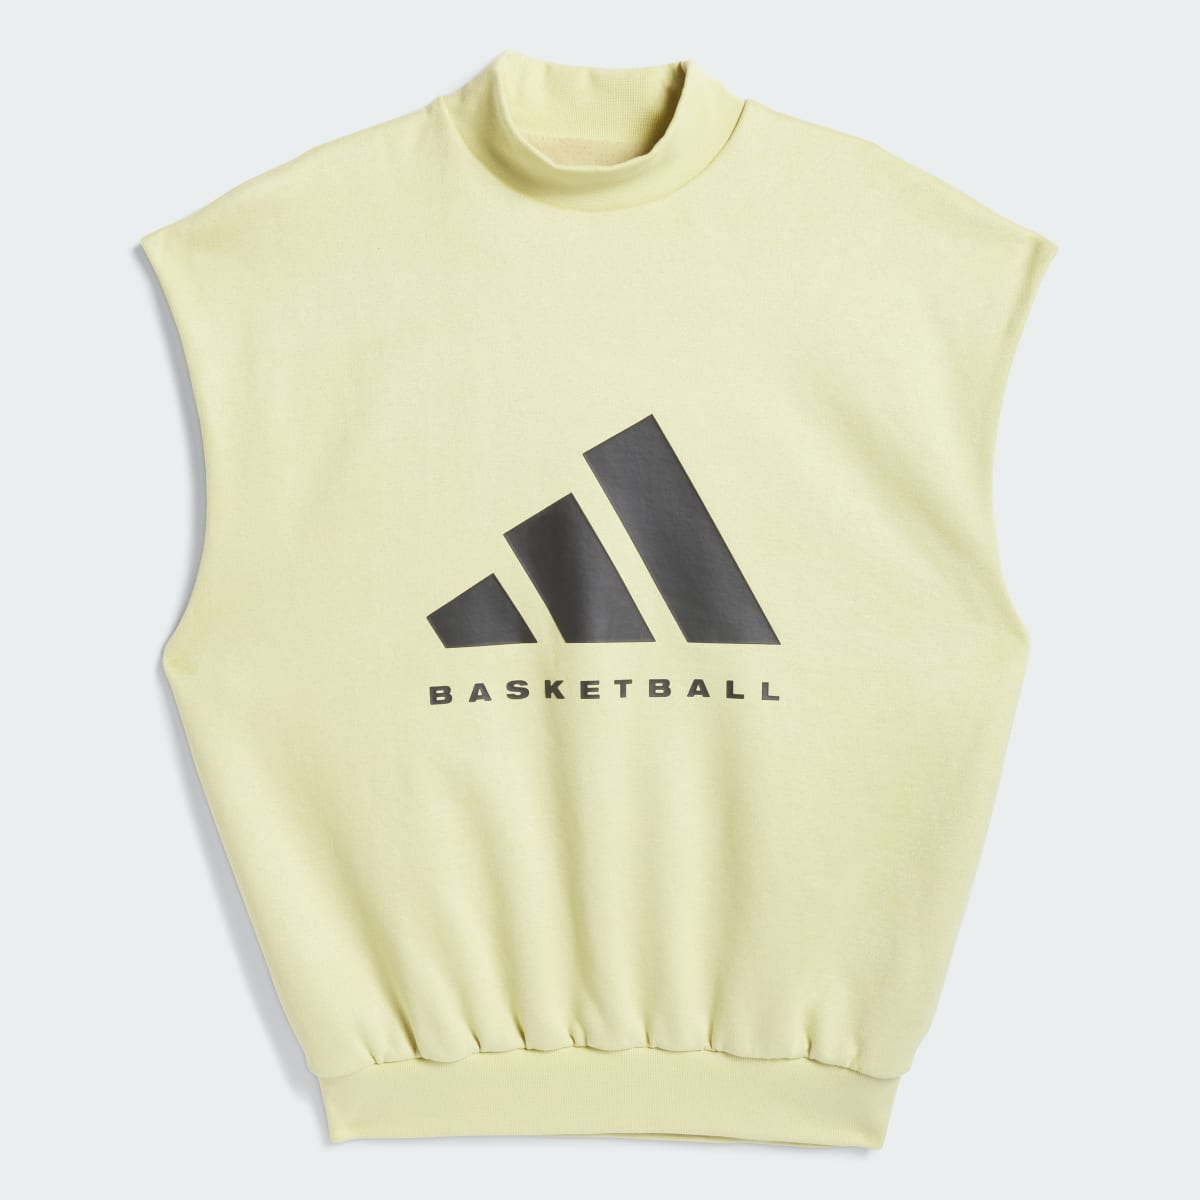 Adidas Basketball Sueded Sleeveless Sweatshirt. 4